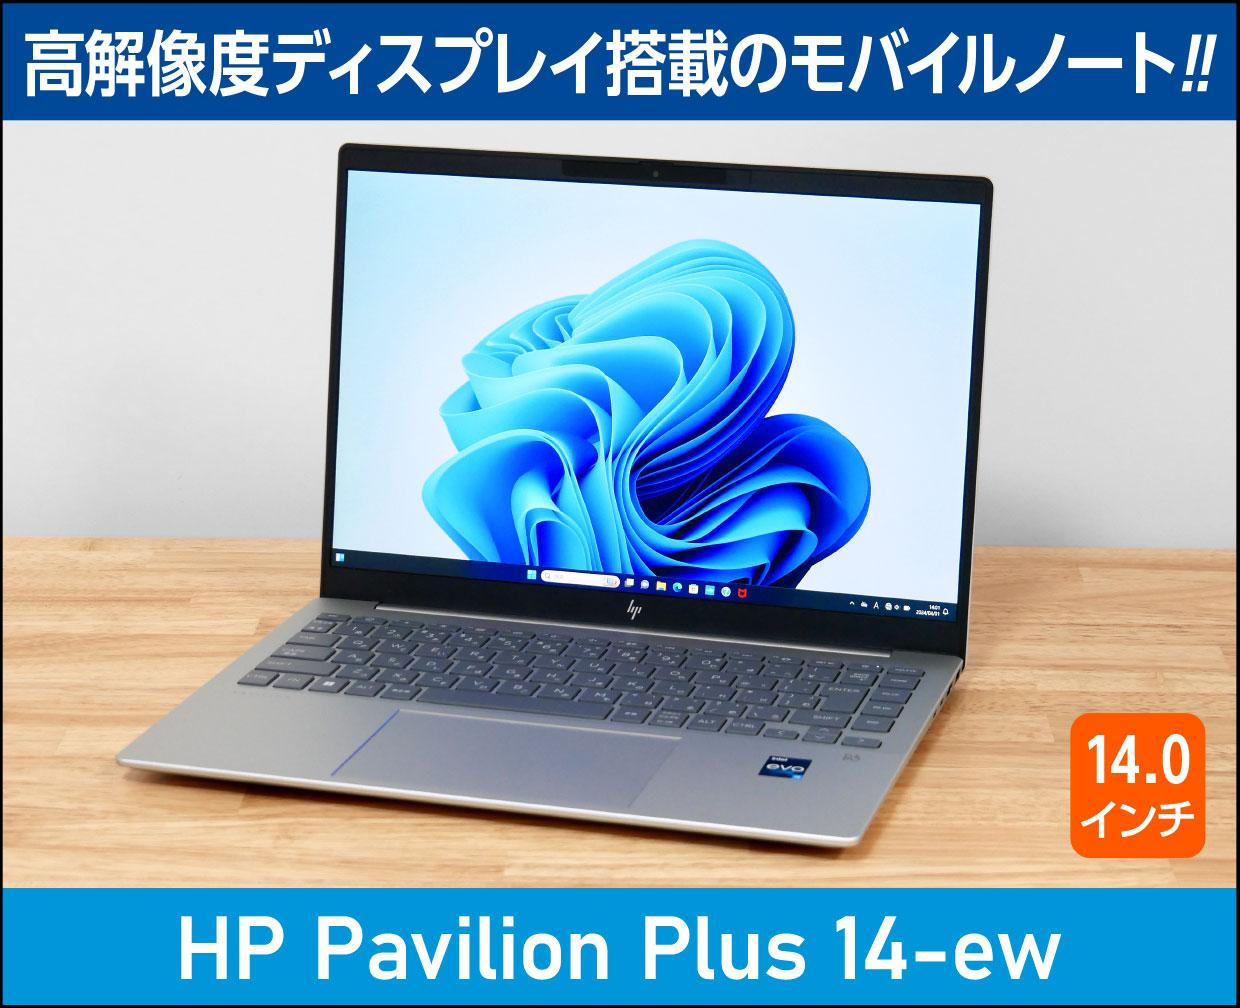 HP Pavilion Plus 14-ewのメイン画像